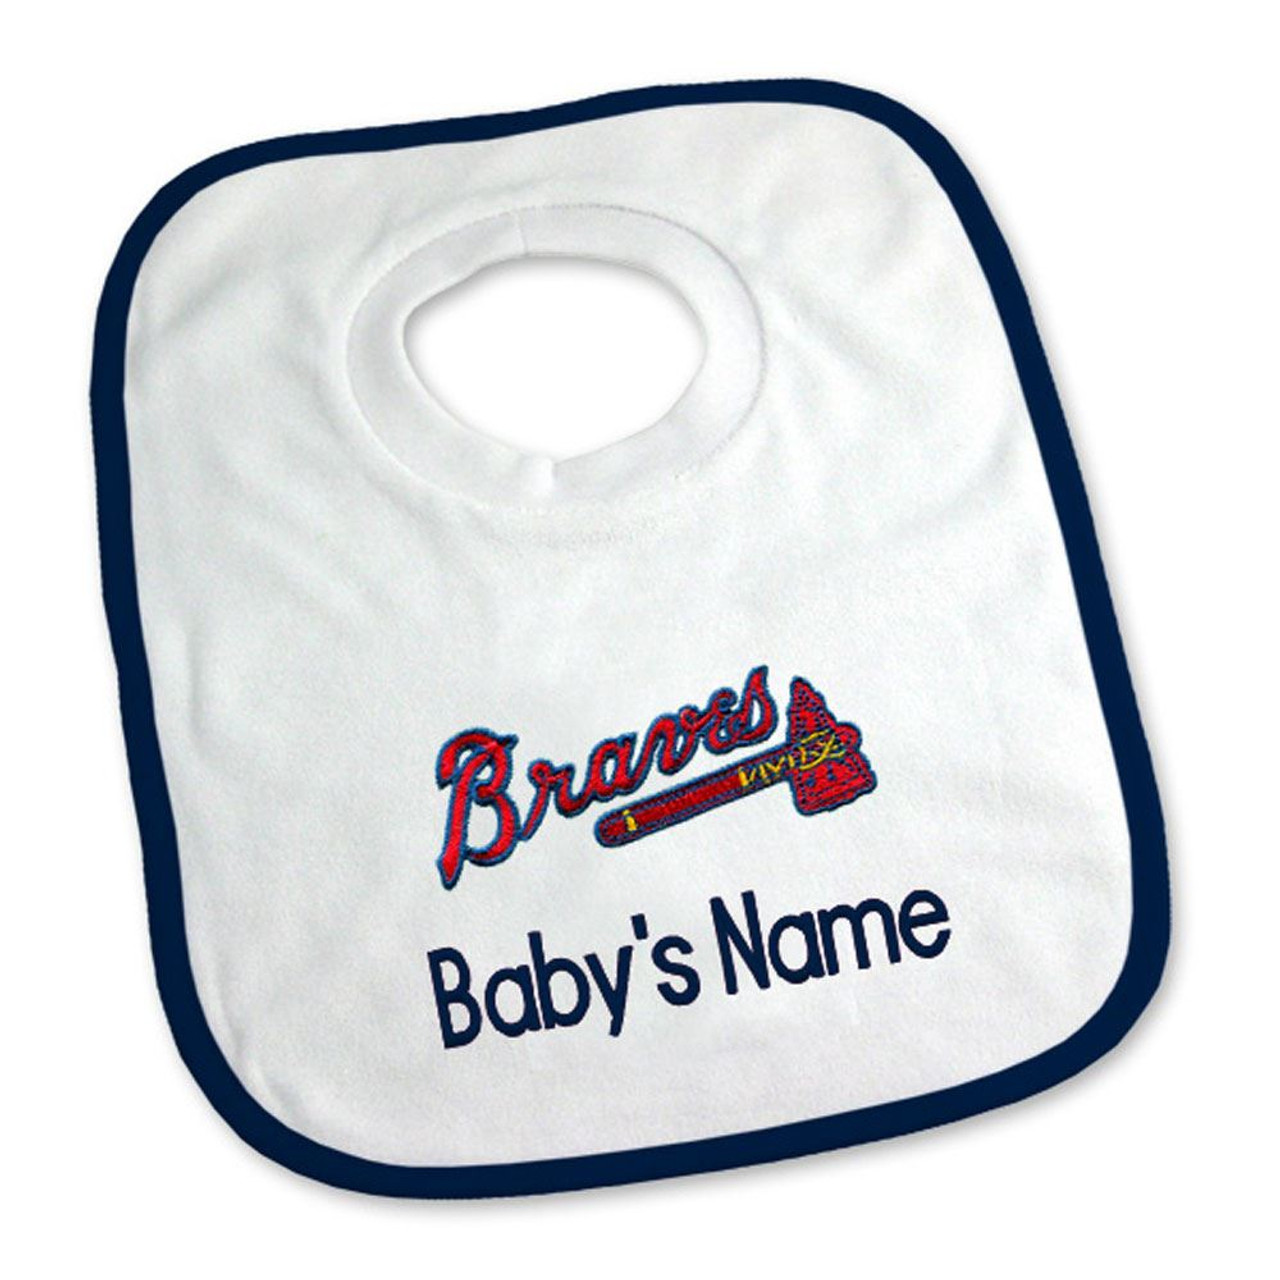 Atlanta Braves Baby Apparel, Braves Infant Jerseys, Toddler Apparel